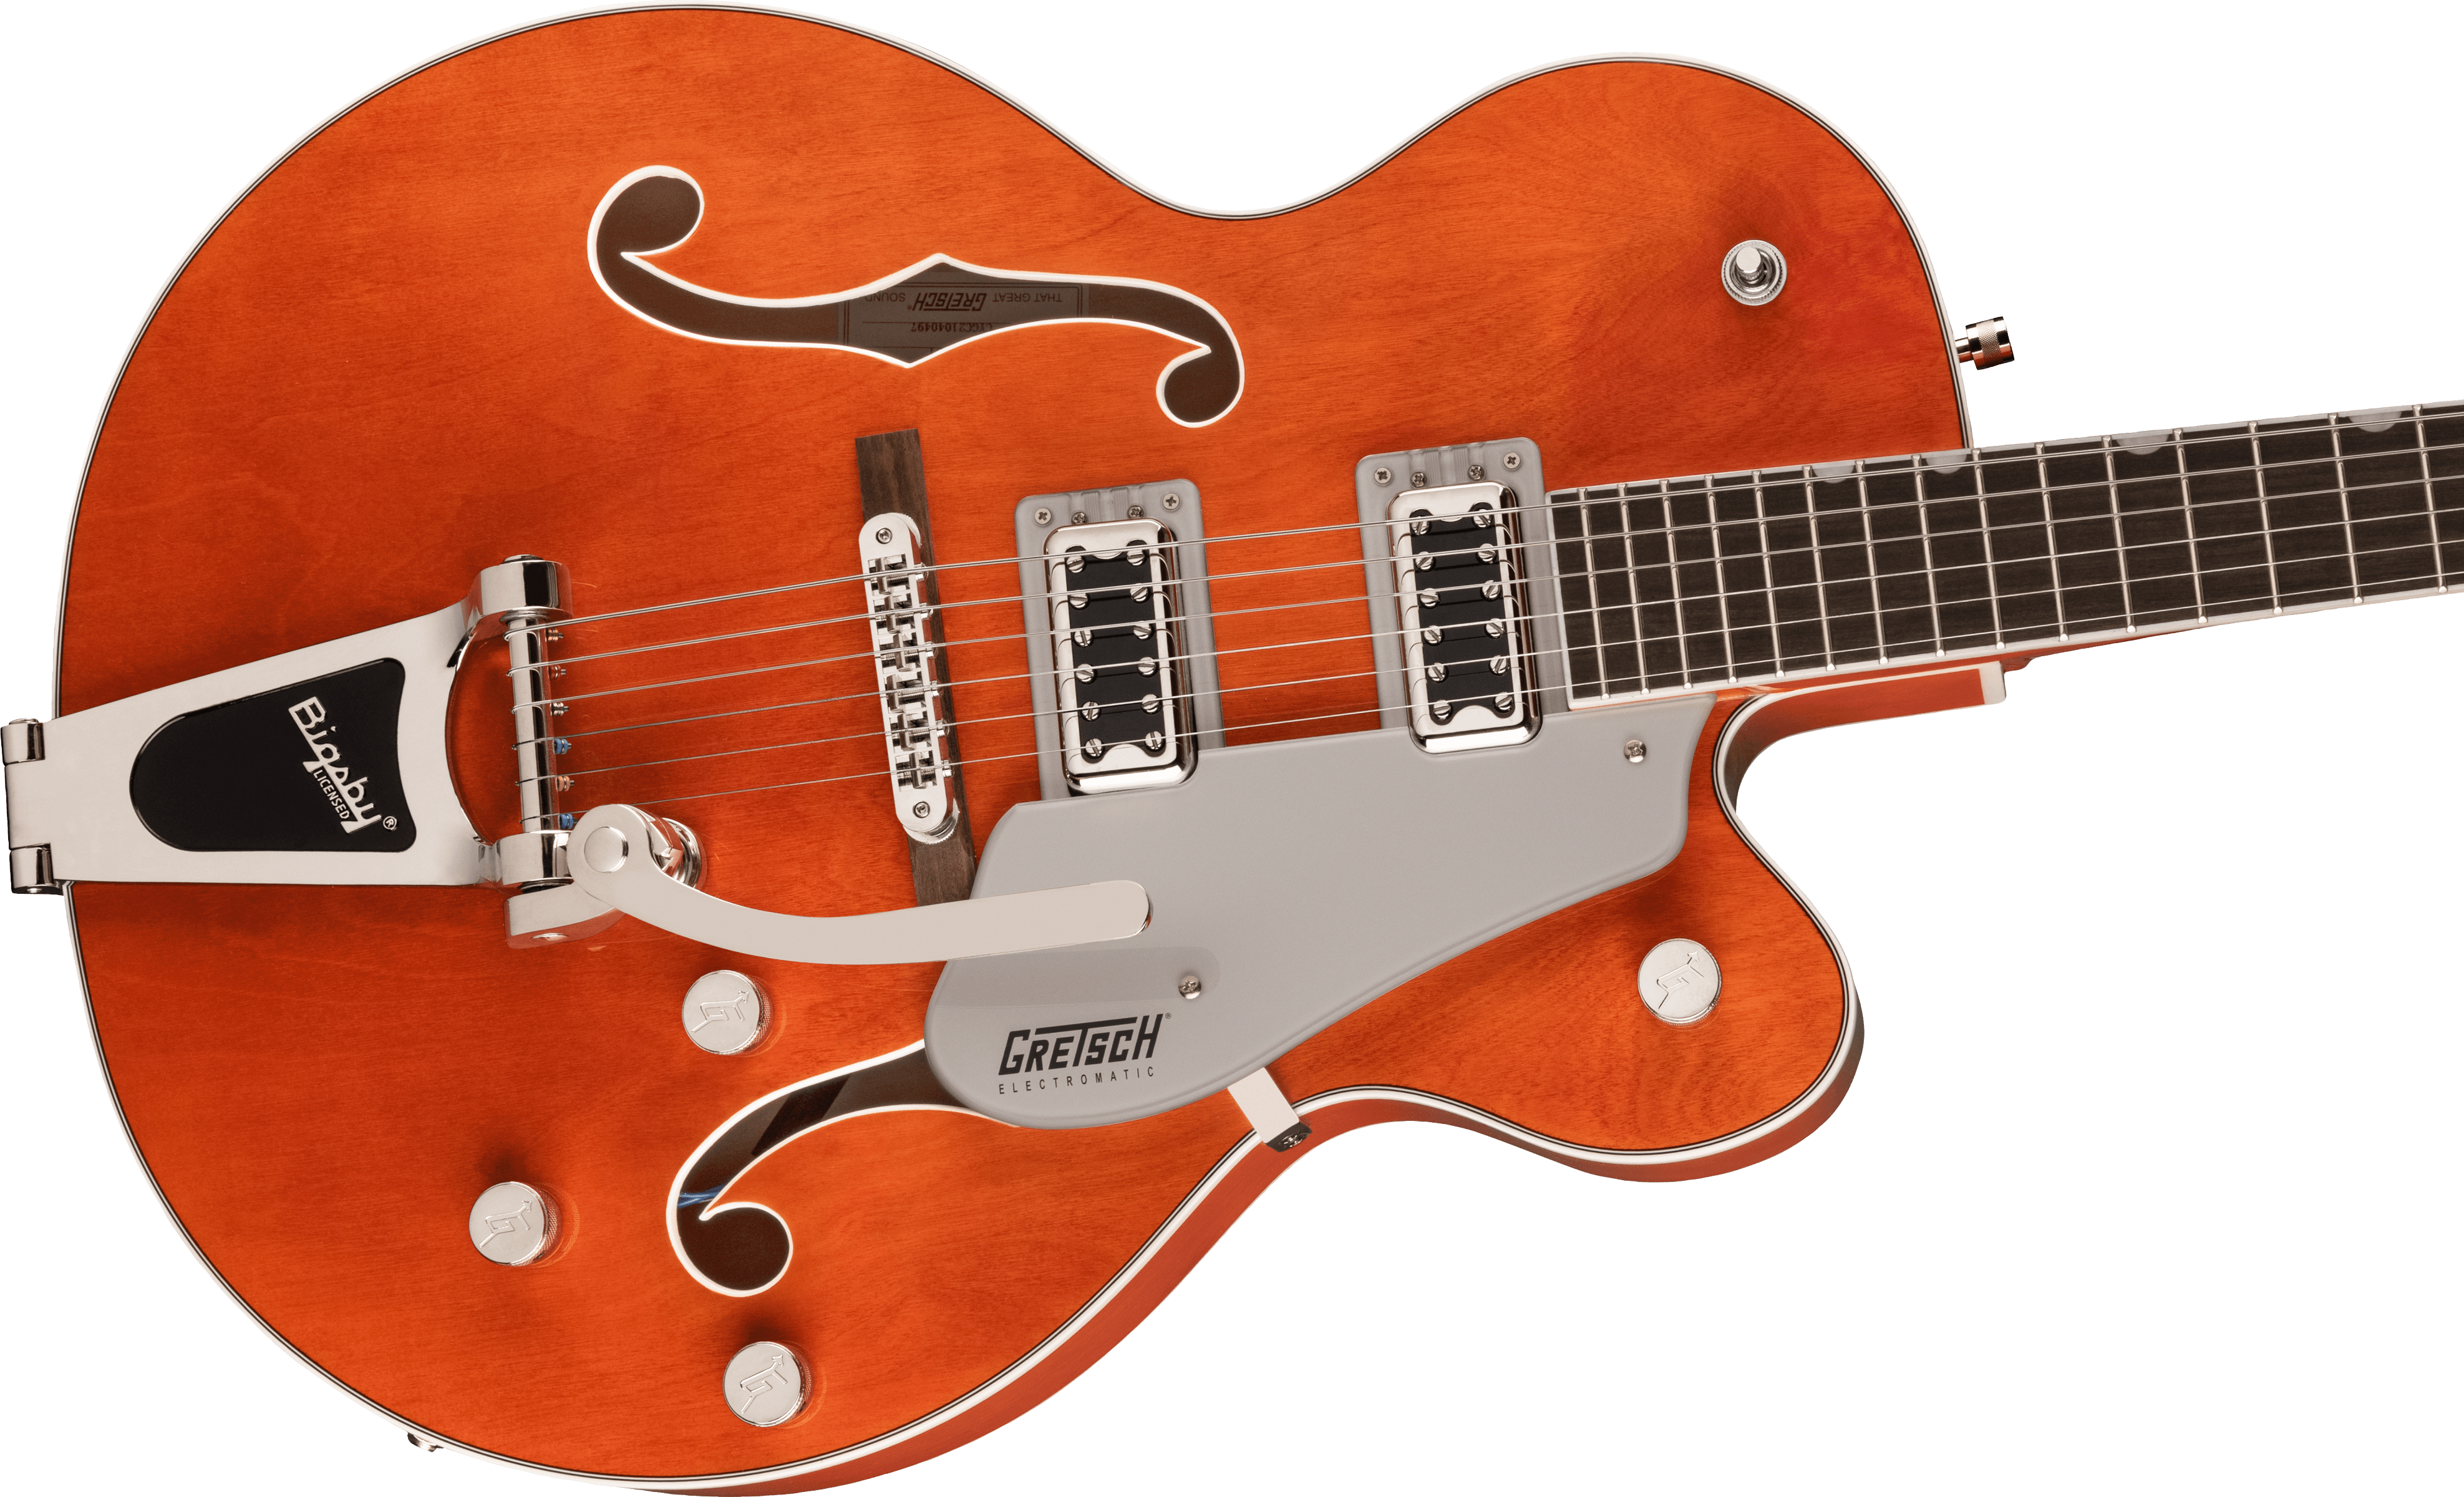 Gretsch G5420T Electromatic Classic Hollowbody Single Cut Electric Guitar - Orange Stain